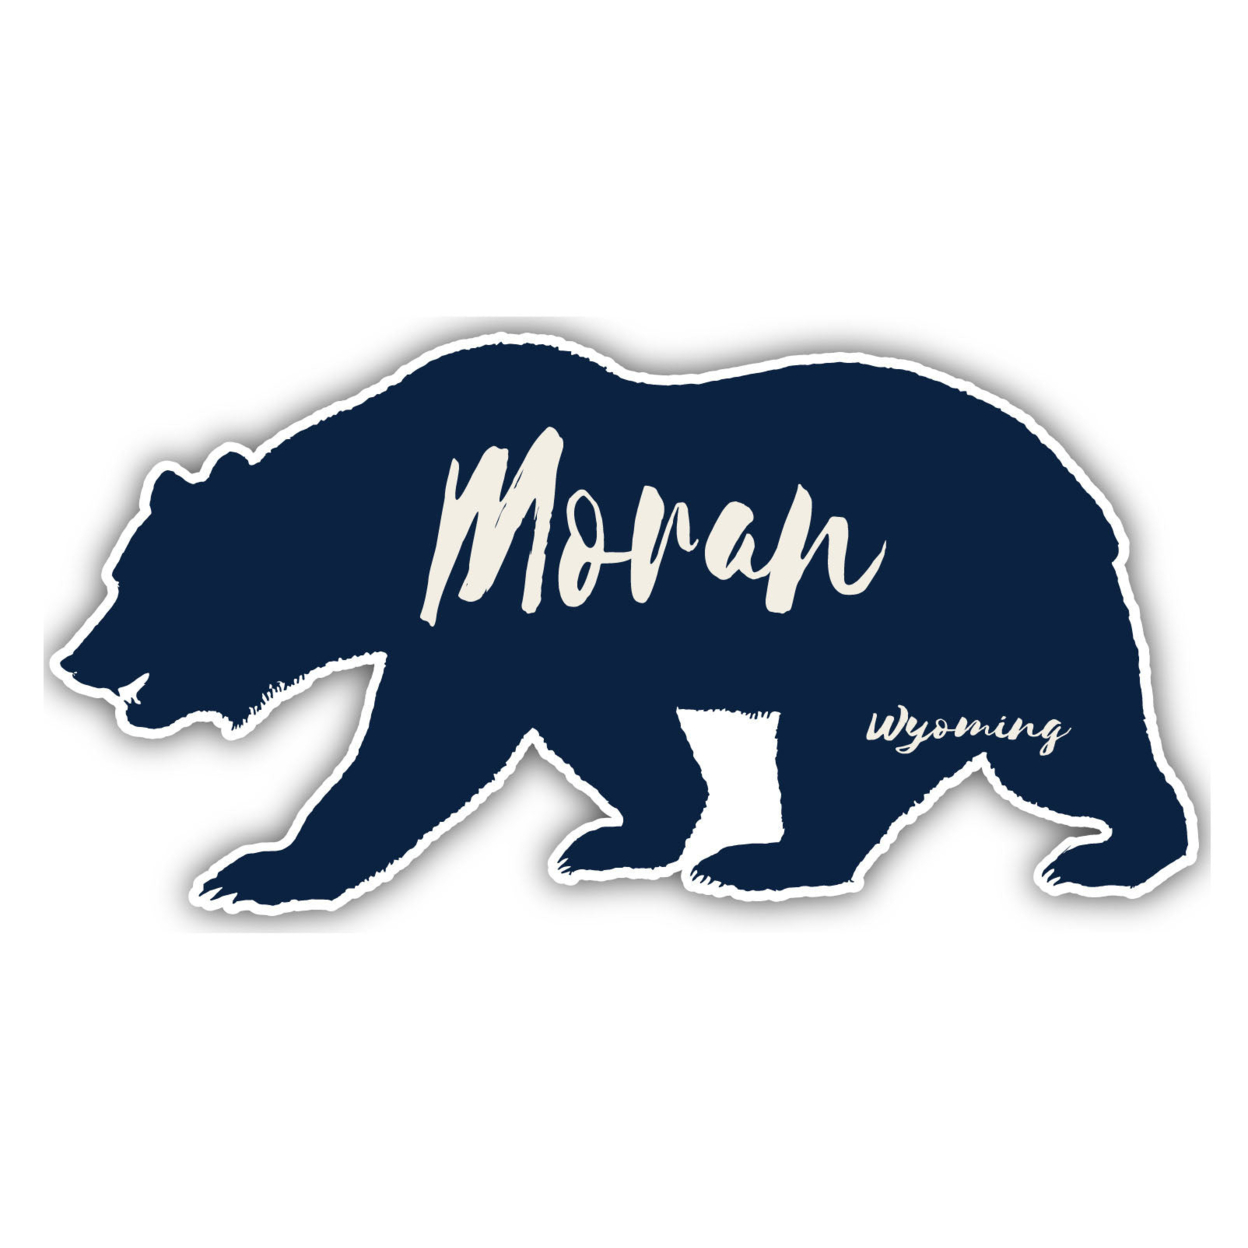 Moran Wyoming Souvenir Decorative Stickers (Choose Theme And Size) - Single Unit, 4-Inch, Camp Life